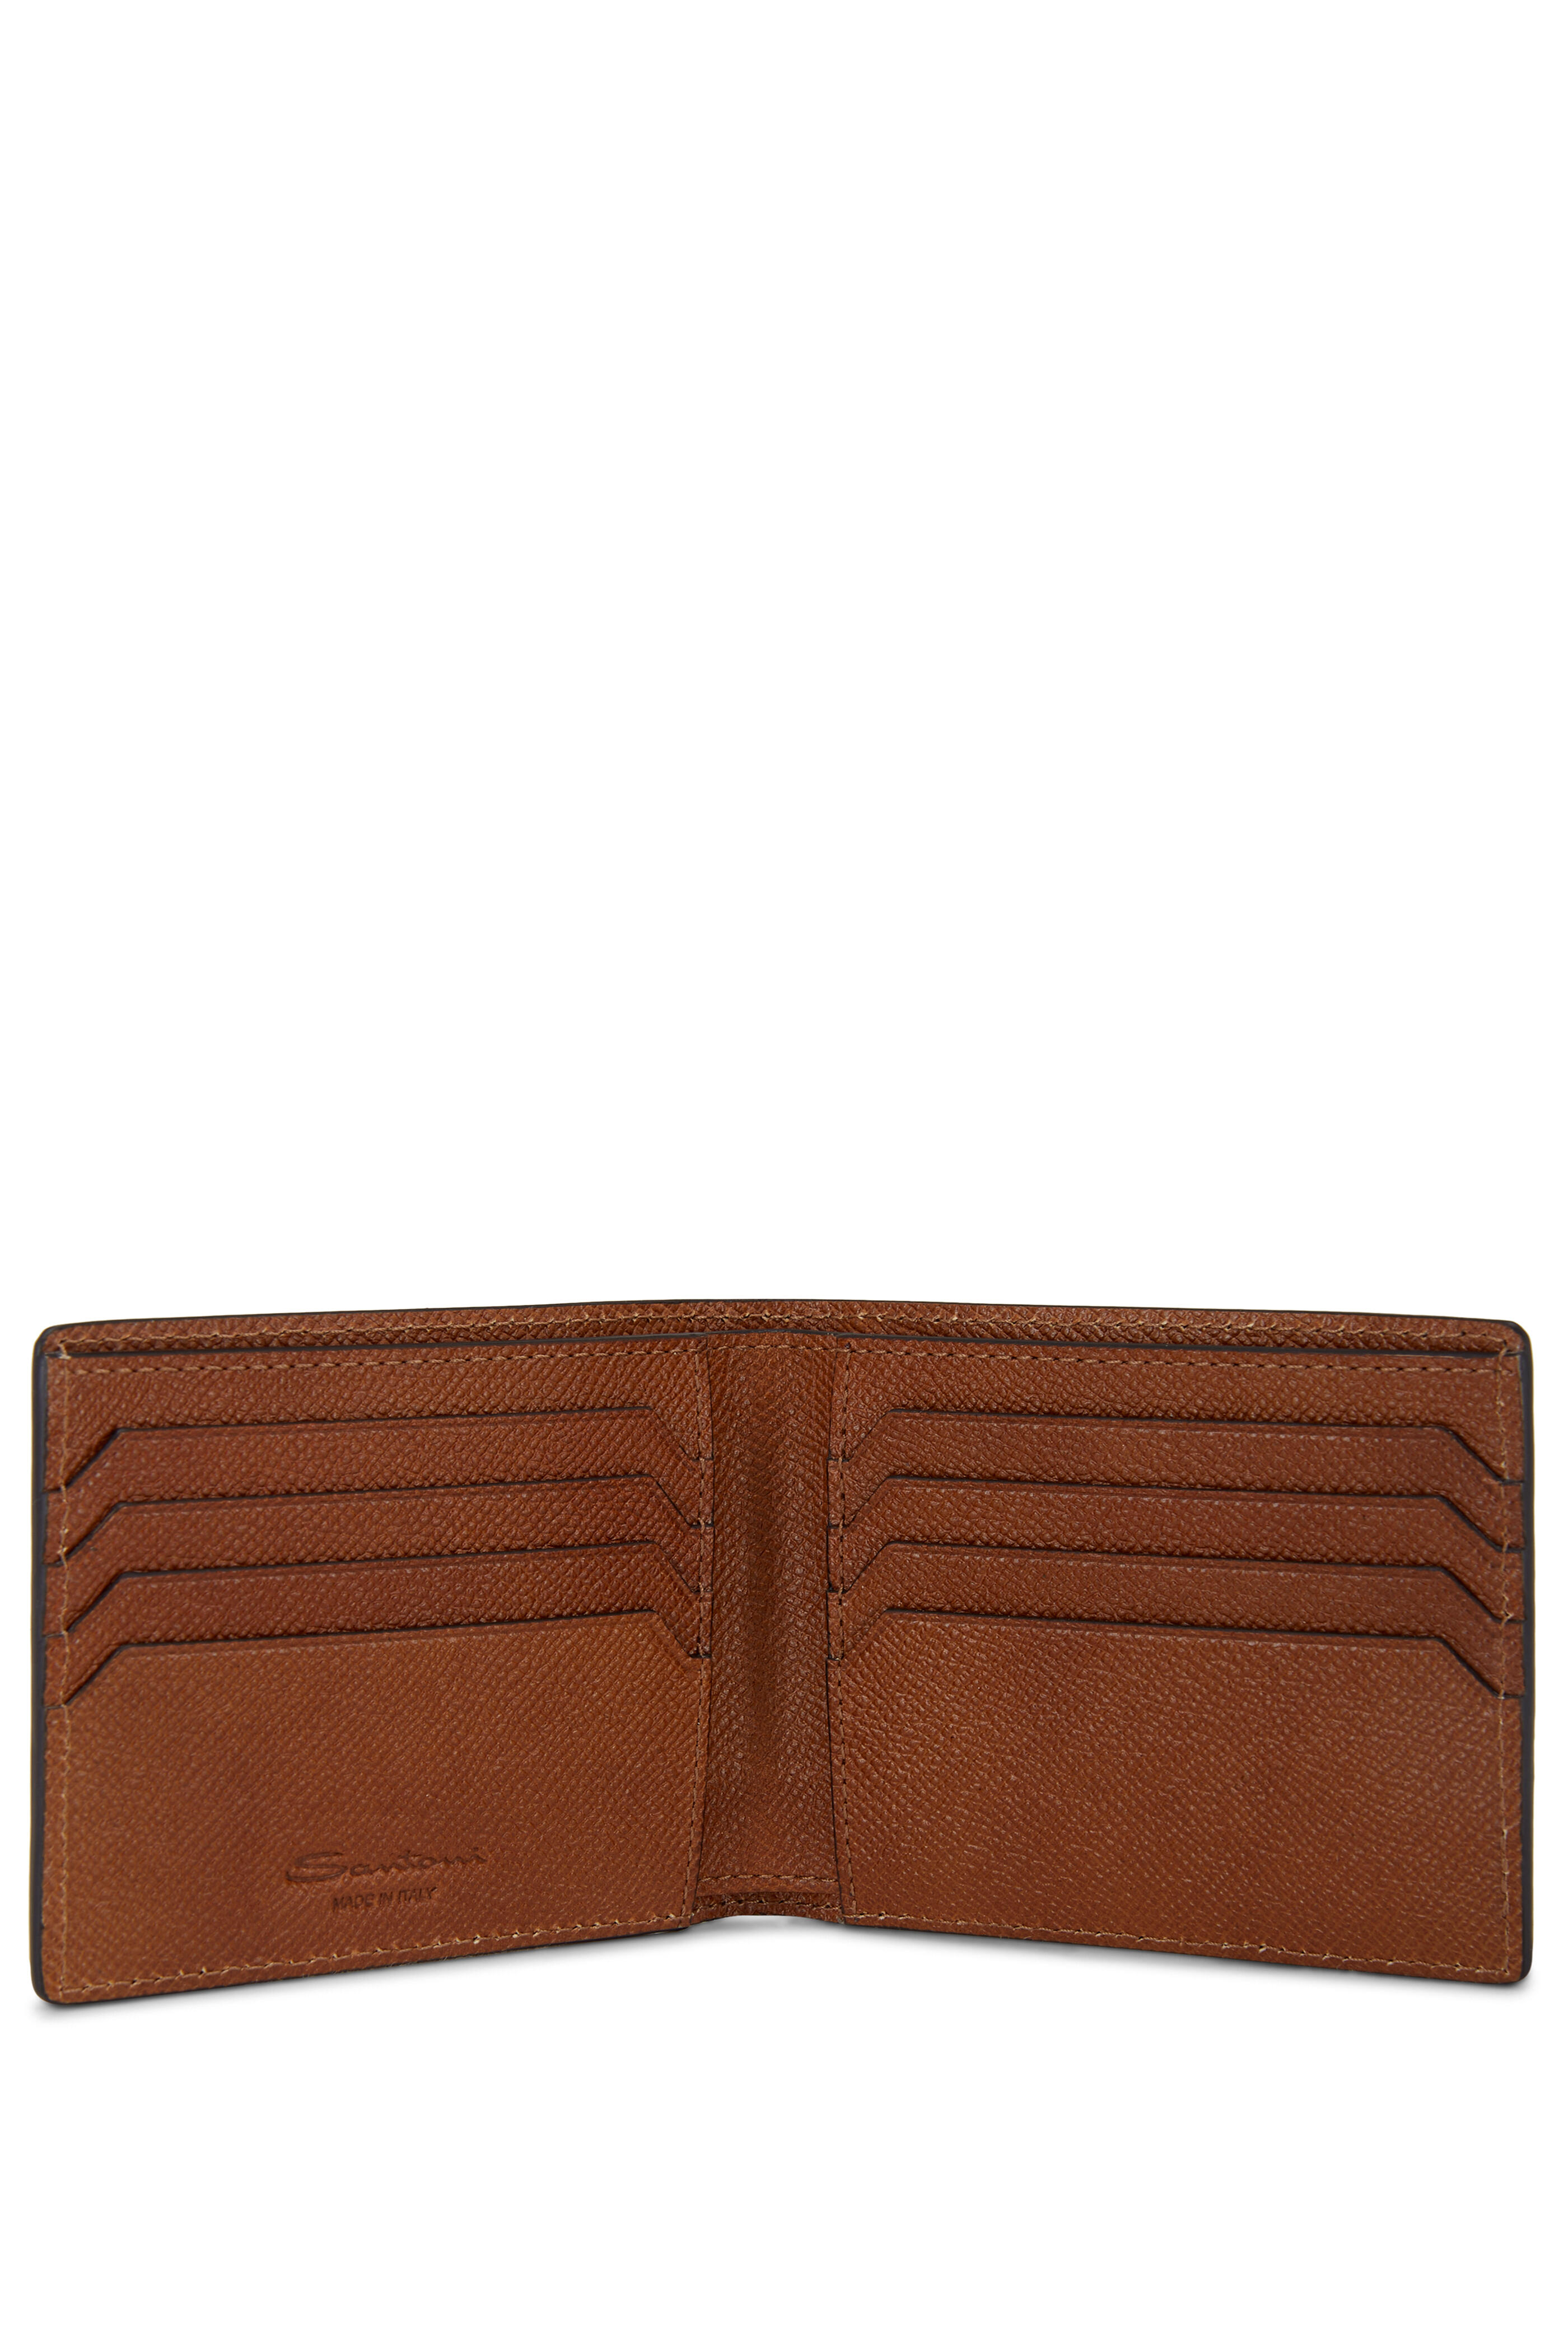 Louis Vuitton SLENDER Calfskin Street Style Plain Leather Folding